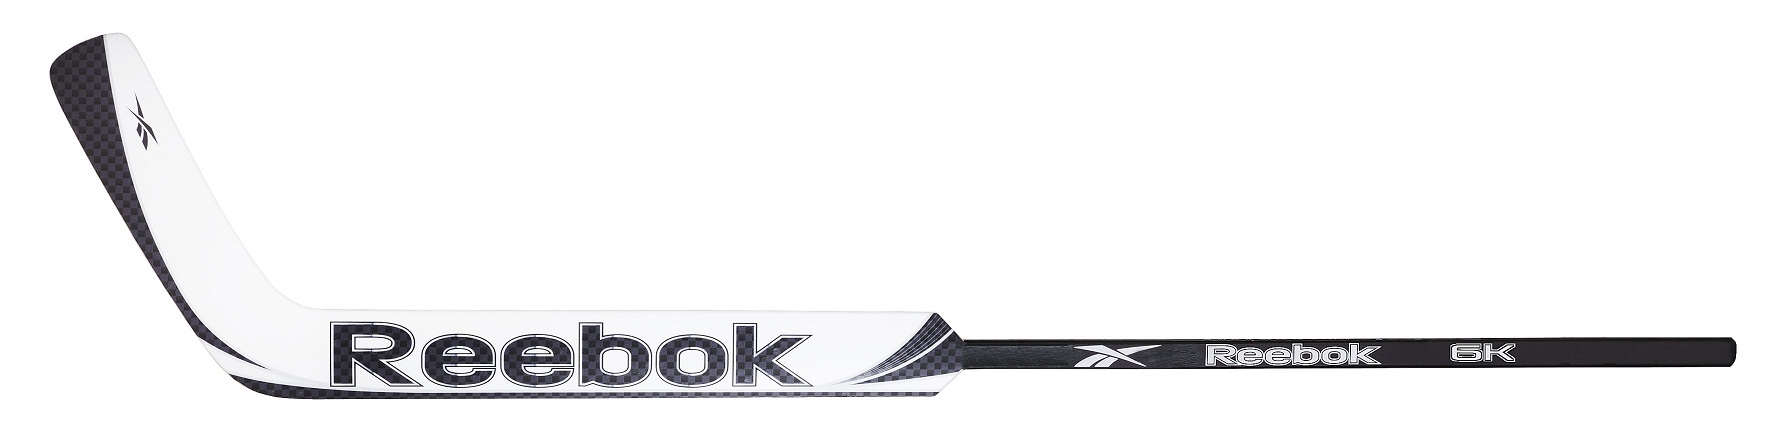 reebok 11k stick goalie